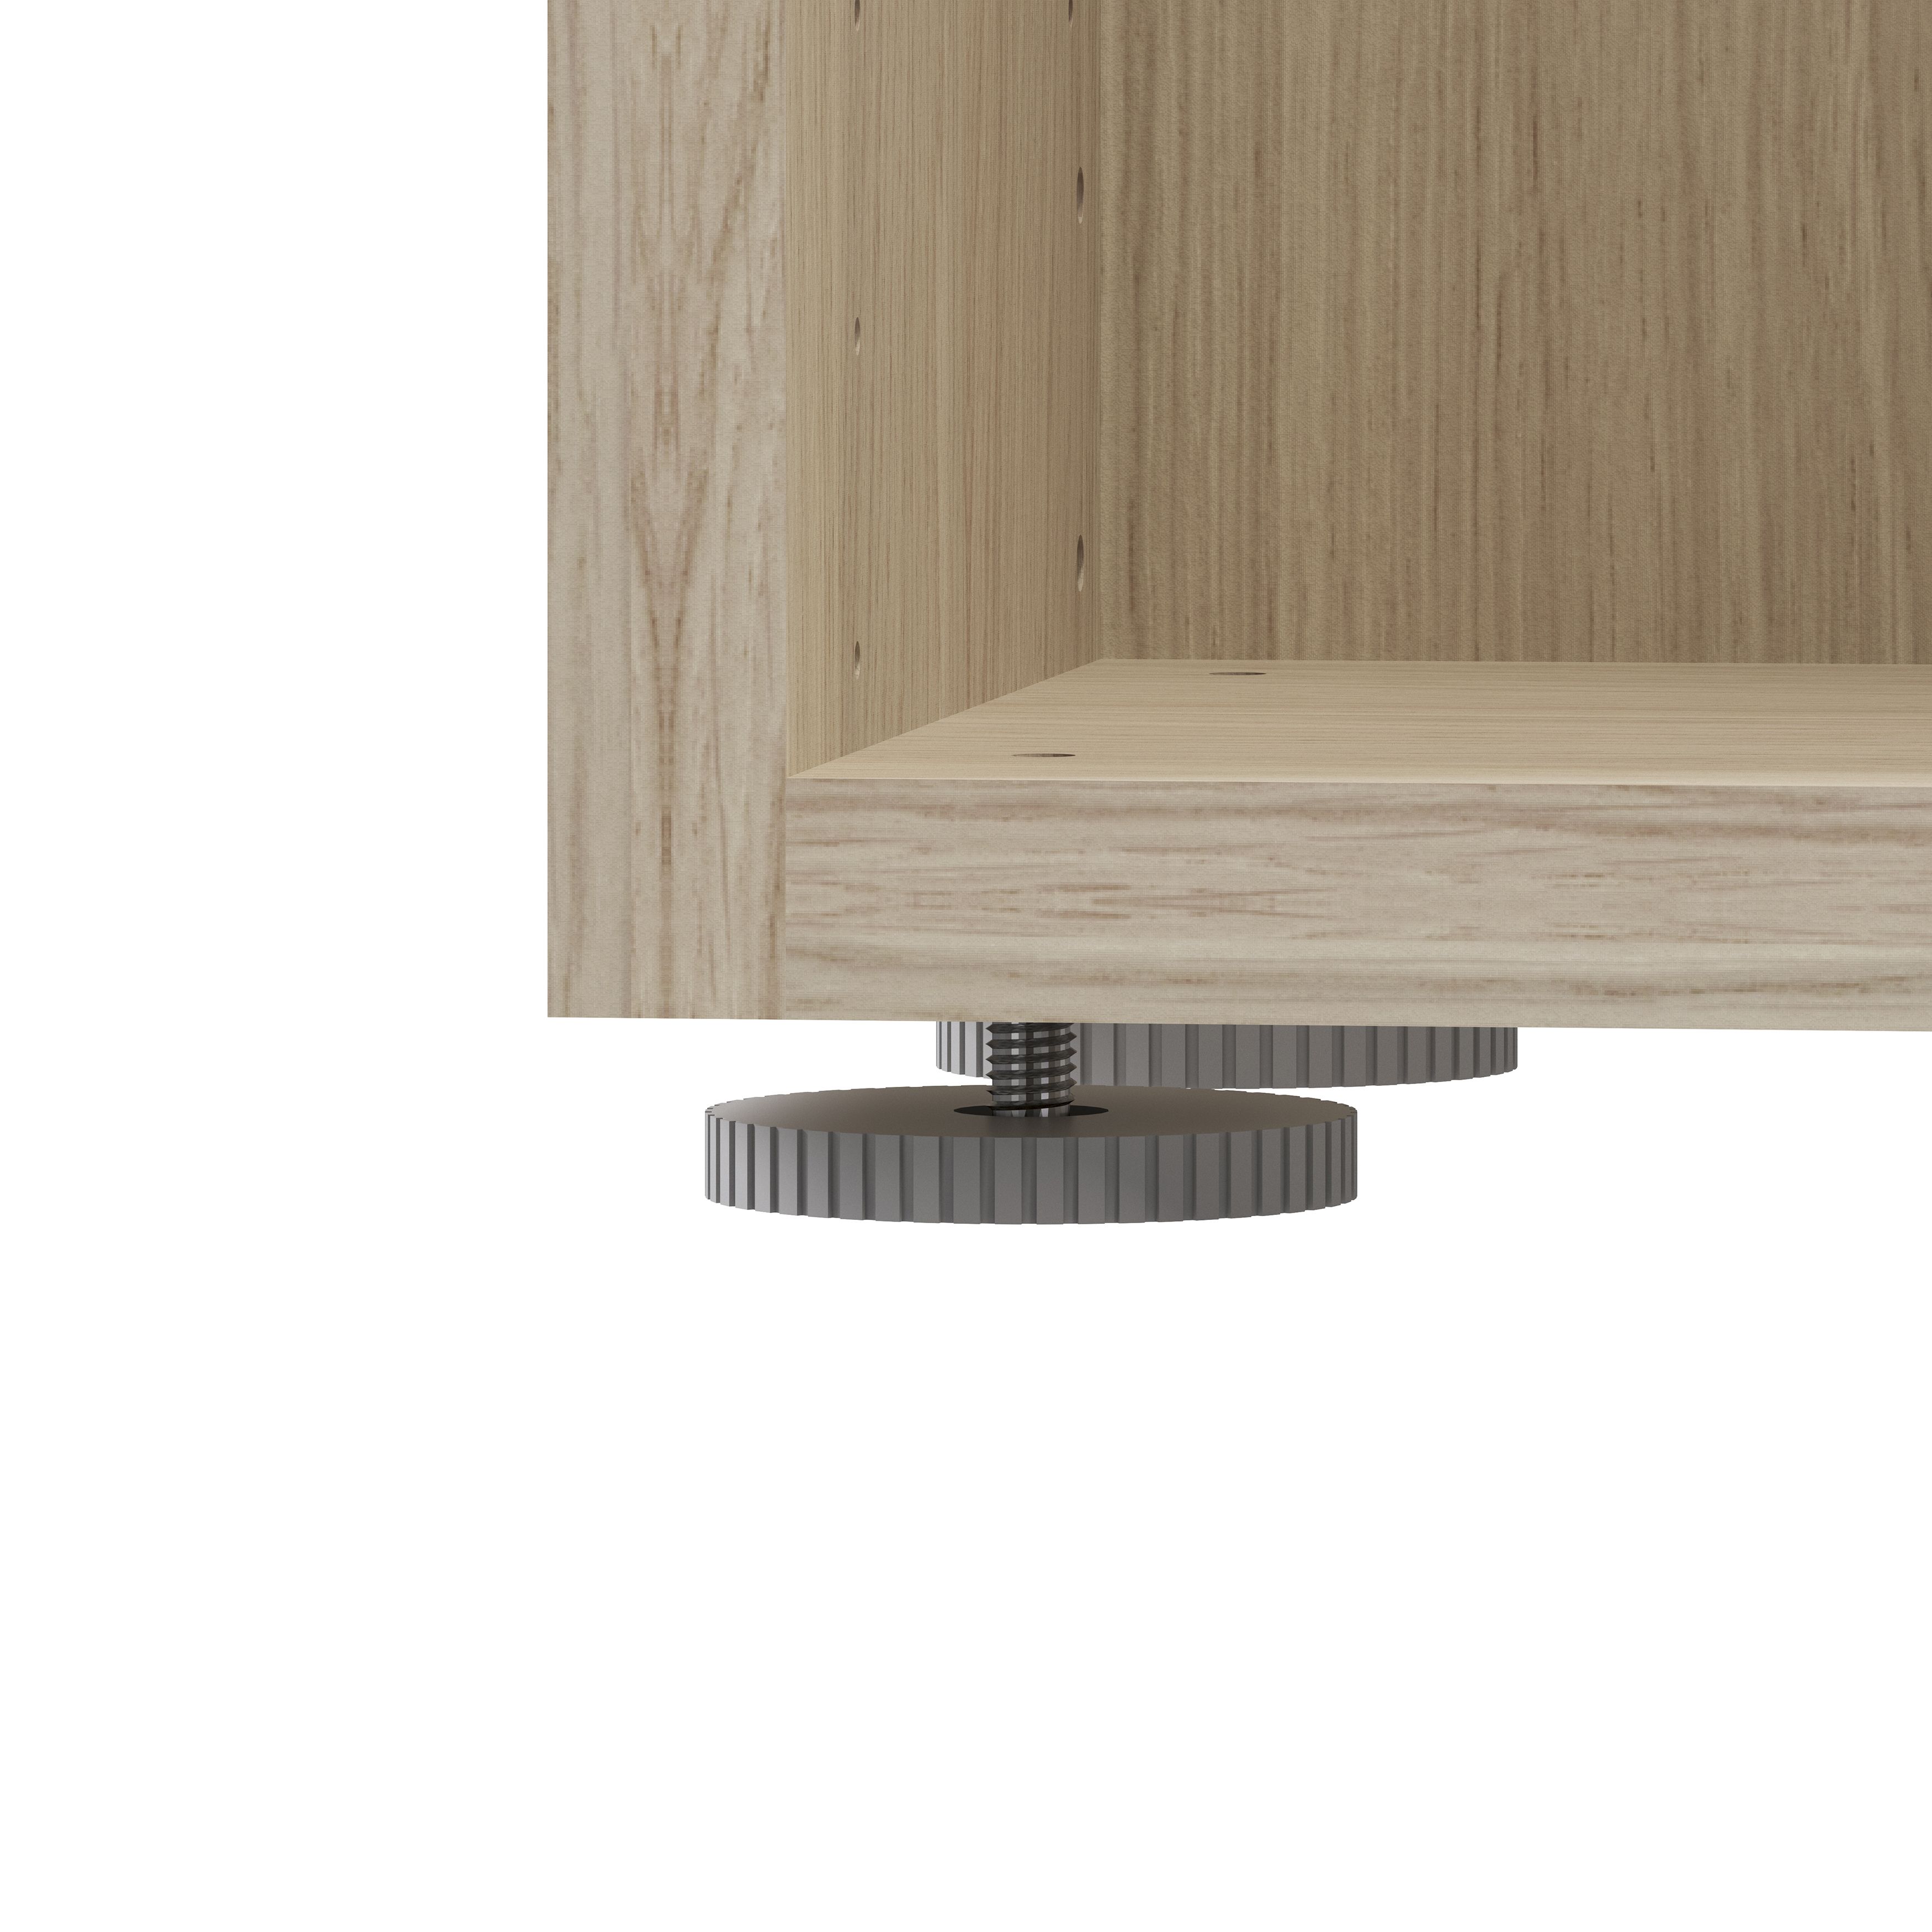 GoodHome Atomia Oak effect Modular furniture cabinet, (H)750mm (W)375mm (D)450mm